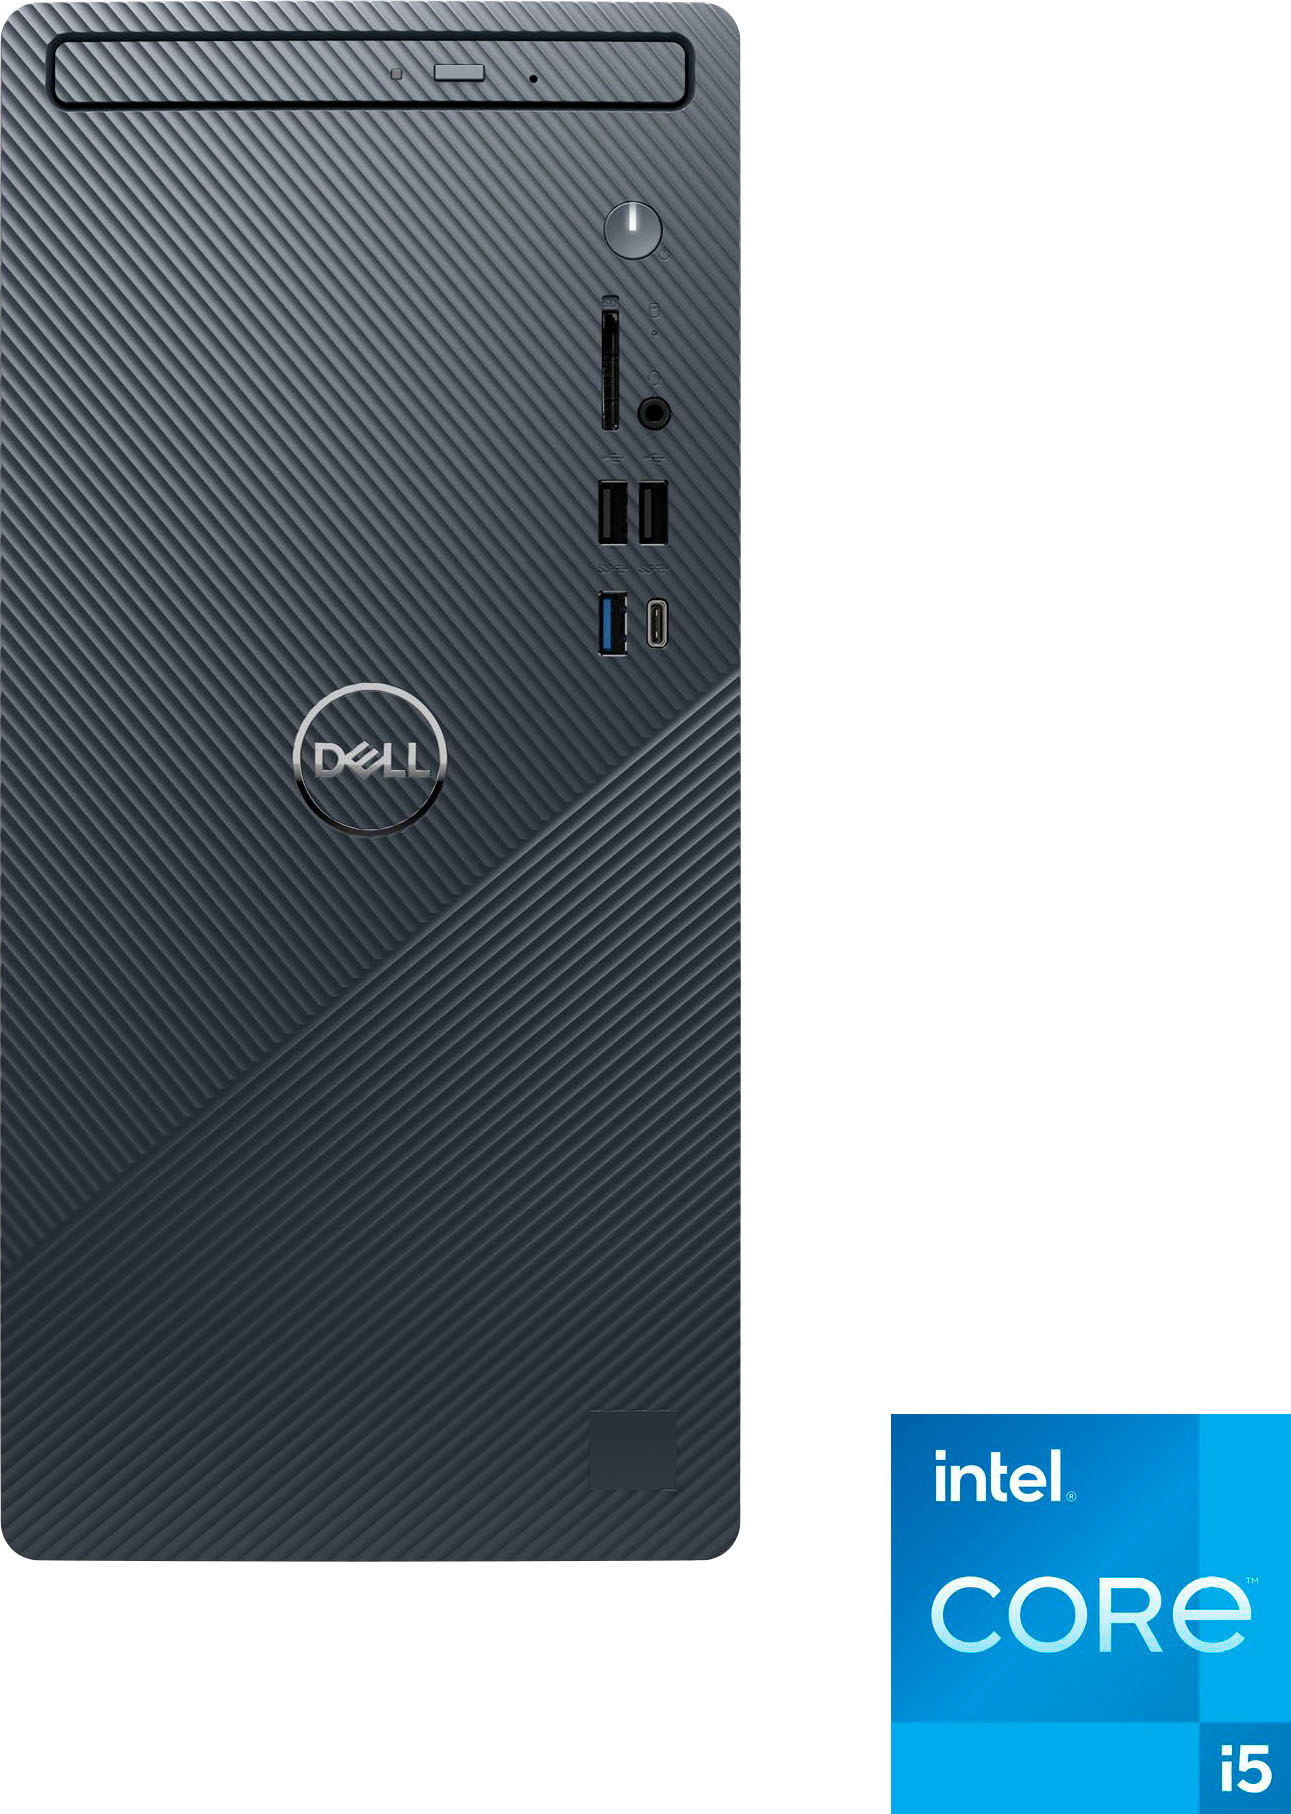 Dell Inspiron 3020 Desktop 13th Gen Intel Core i5 8GB Memory Intel 